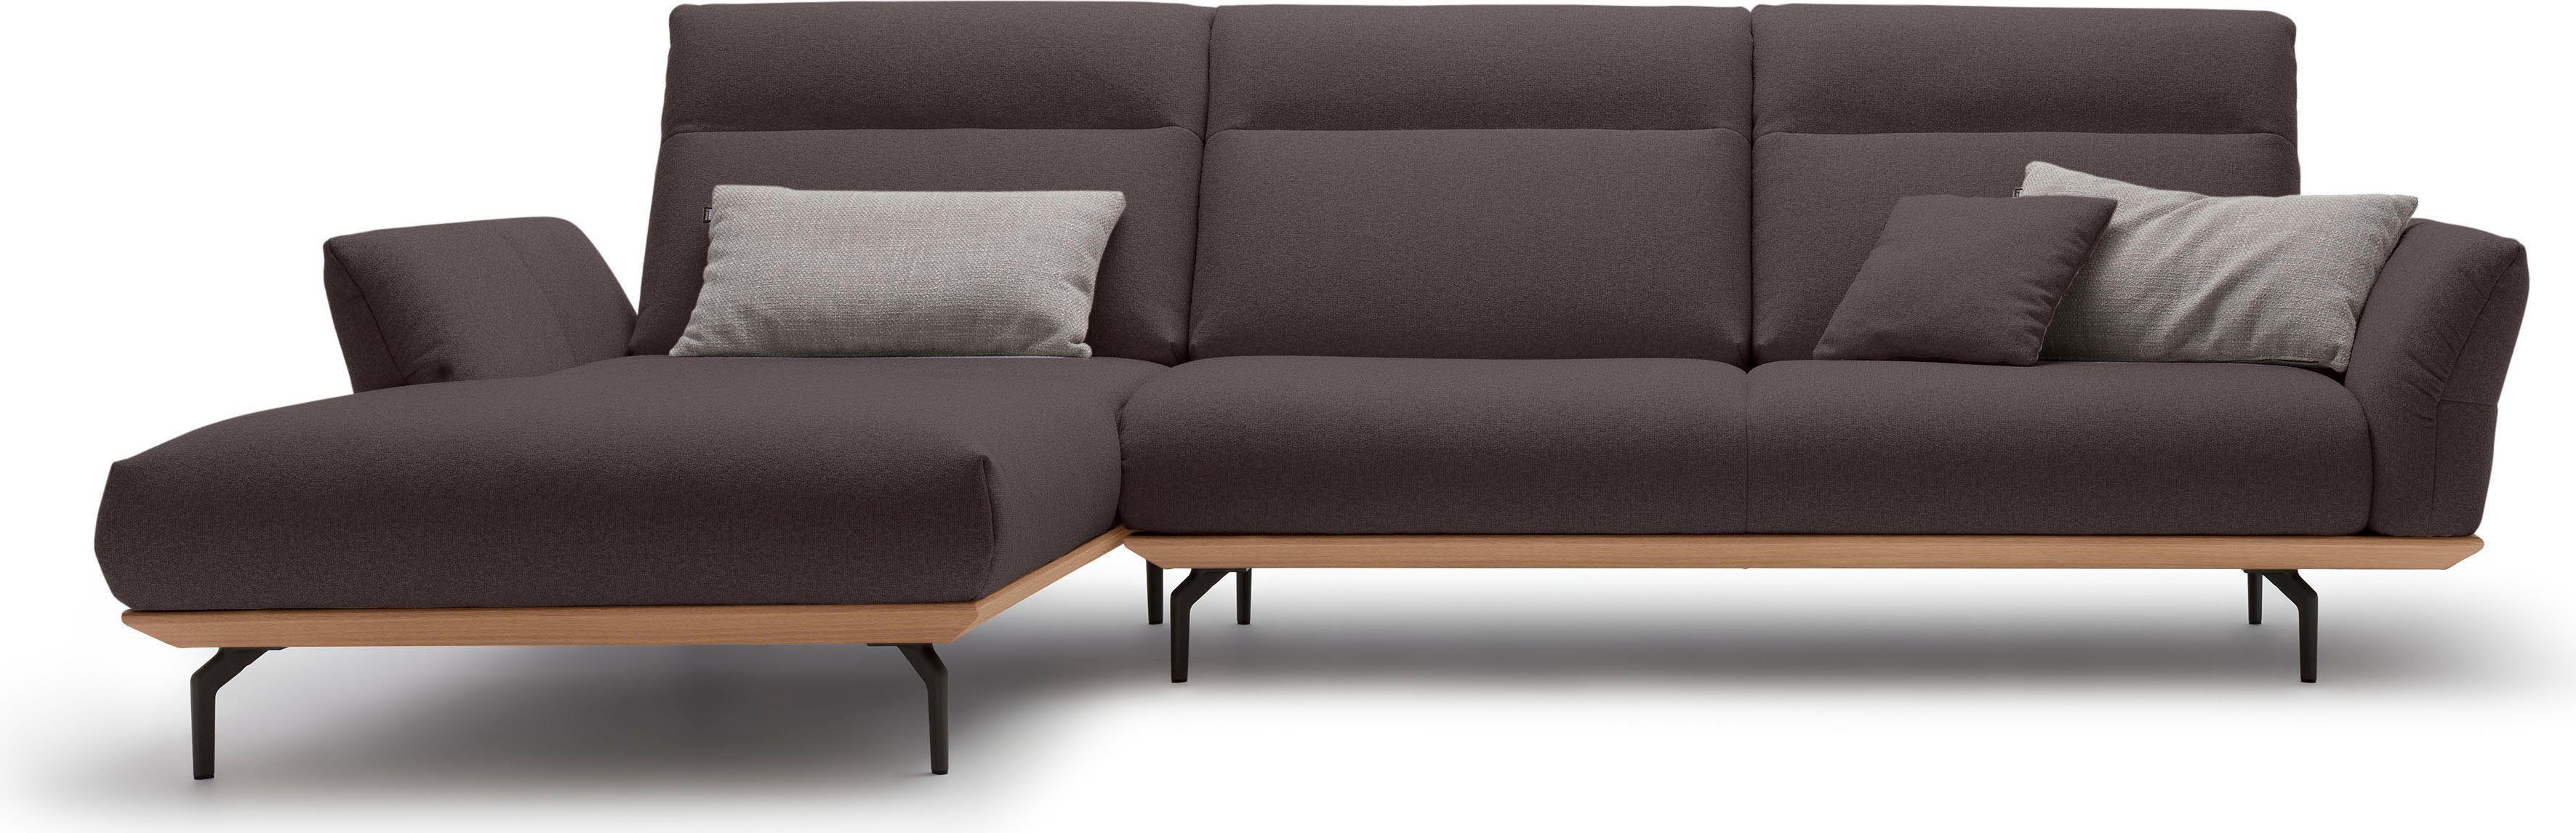 sofa Eiche, hs.460, hülsta Winkelfüße in 318 cm in Breite Umbragrau, Ecksofa Sockel